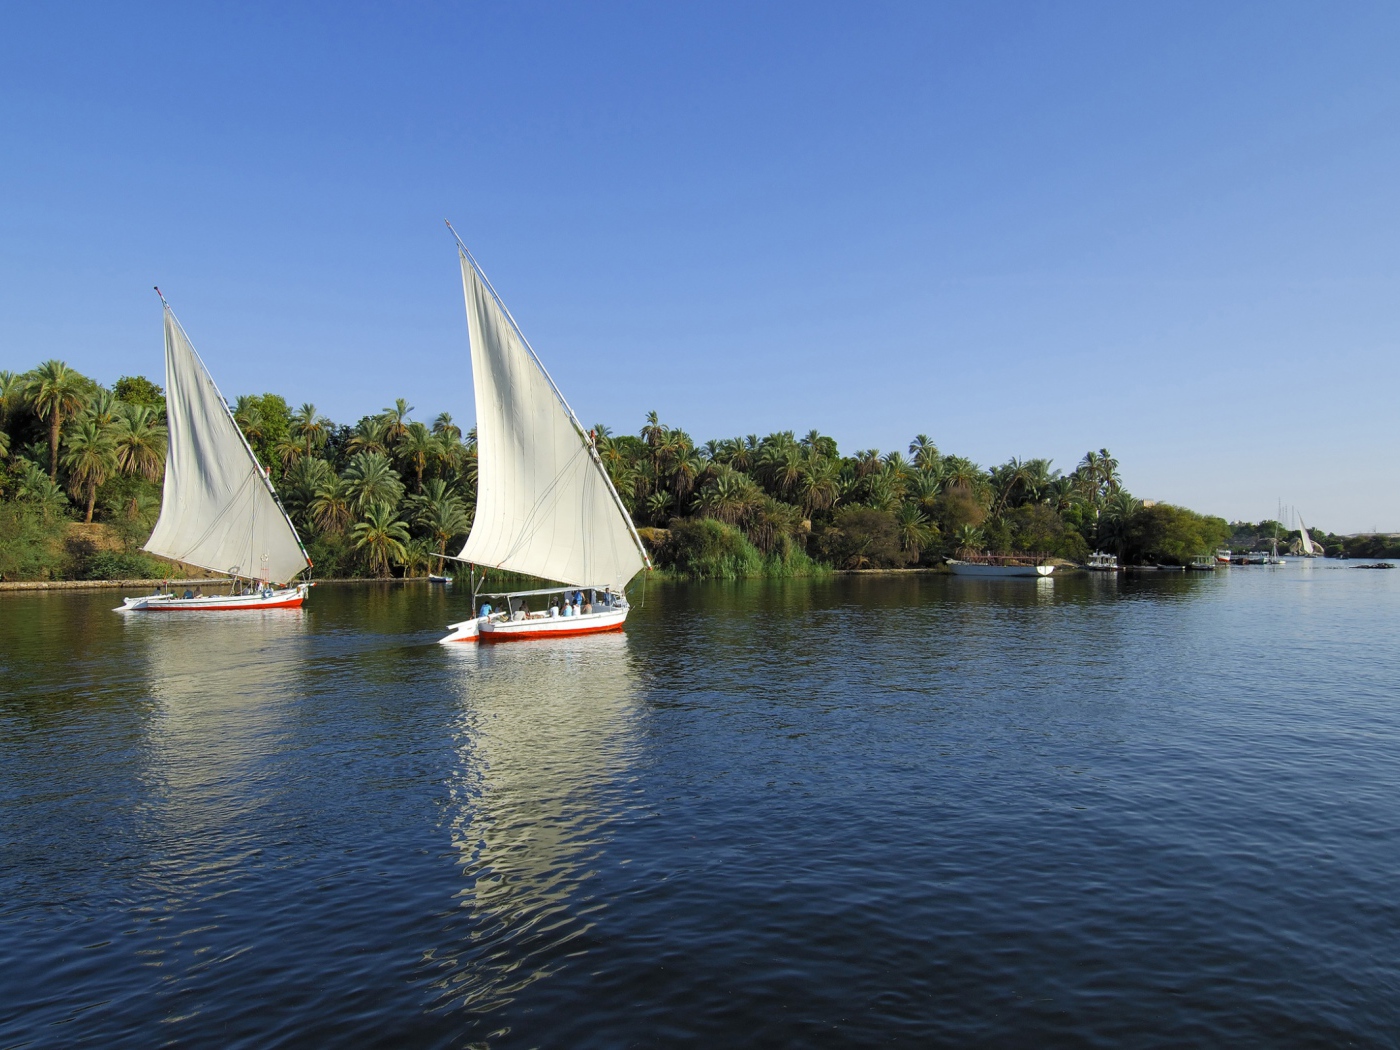 Sailboats on the Nile, Egypt